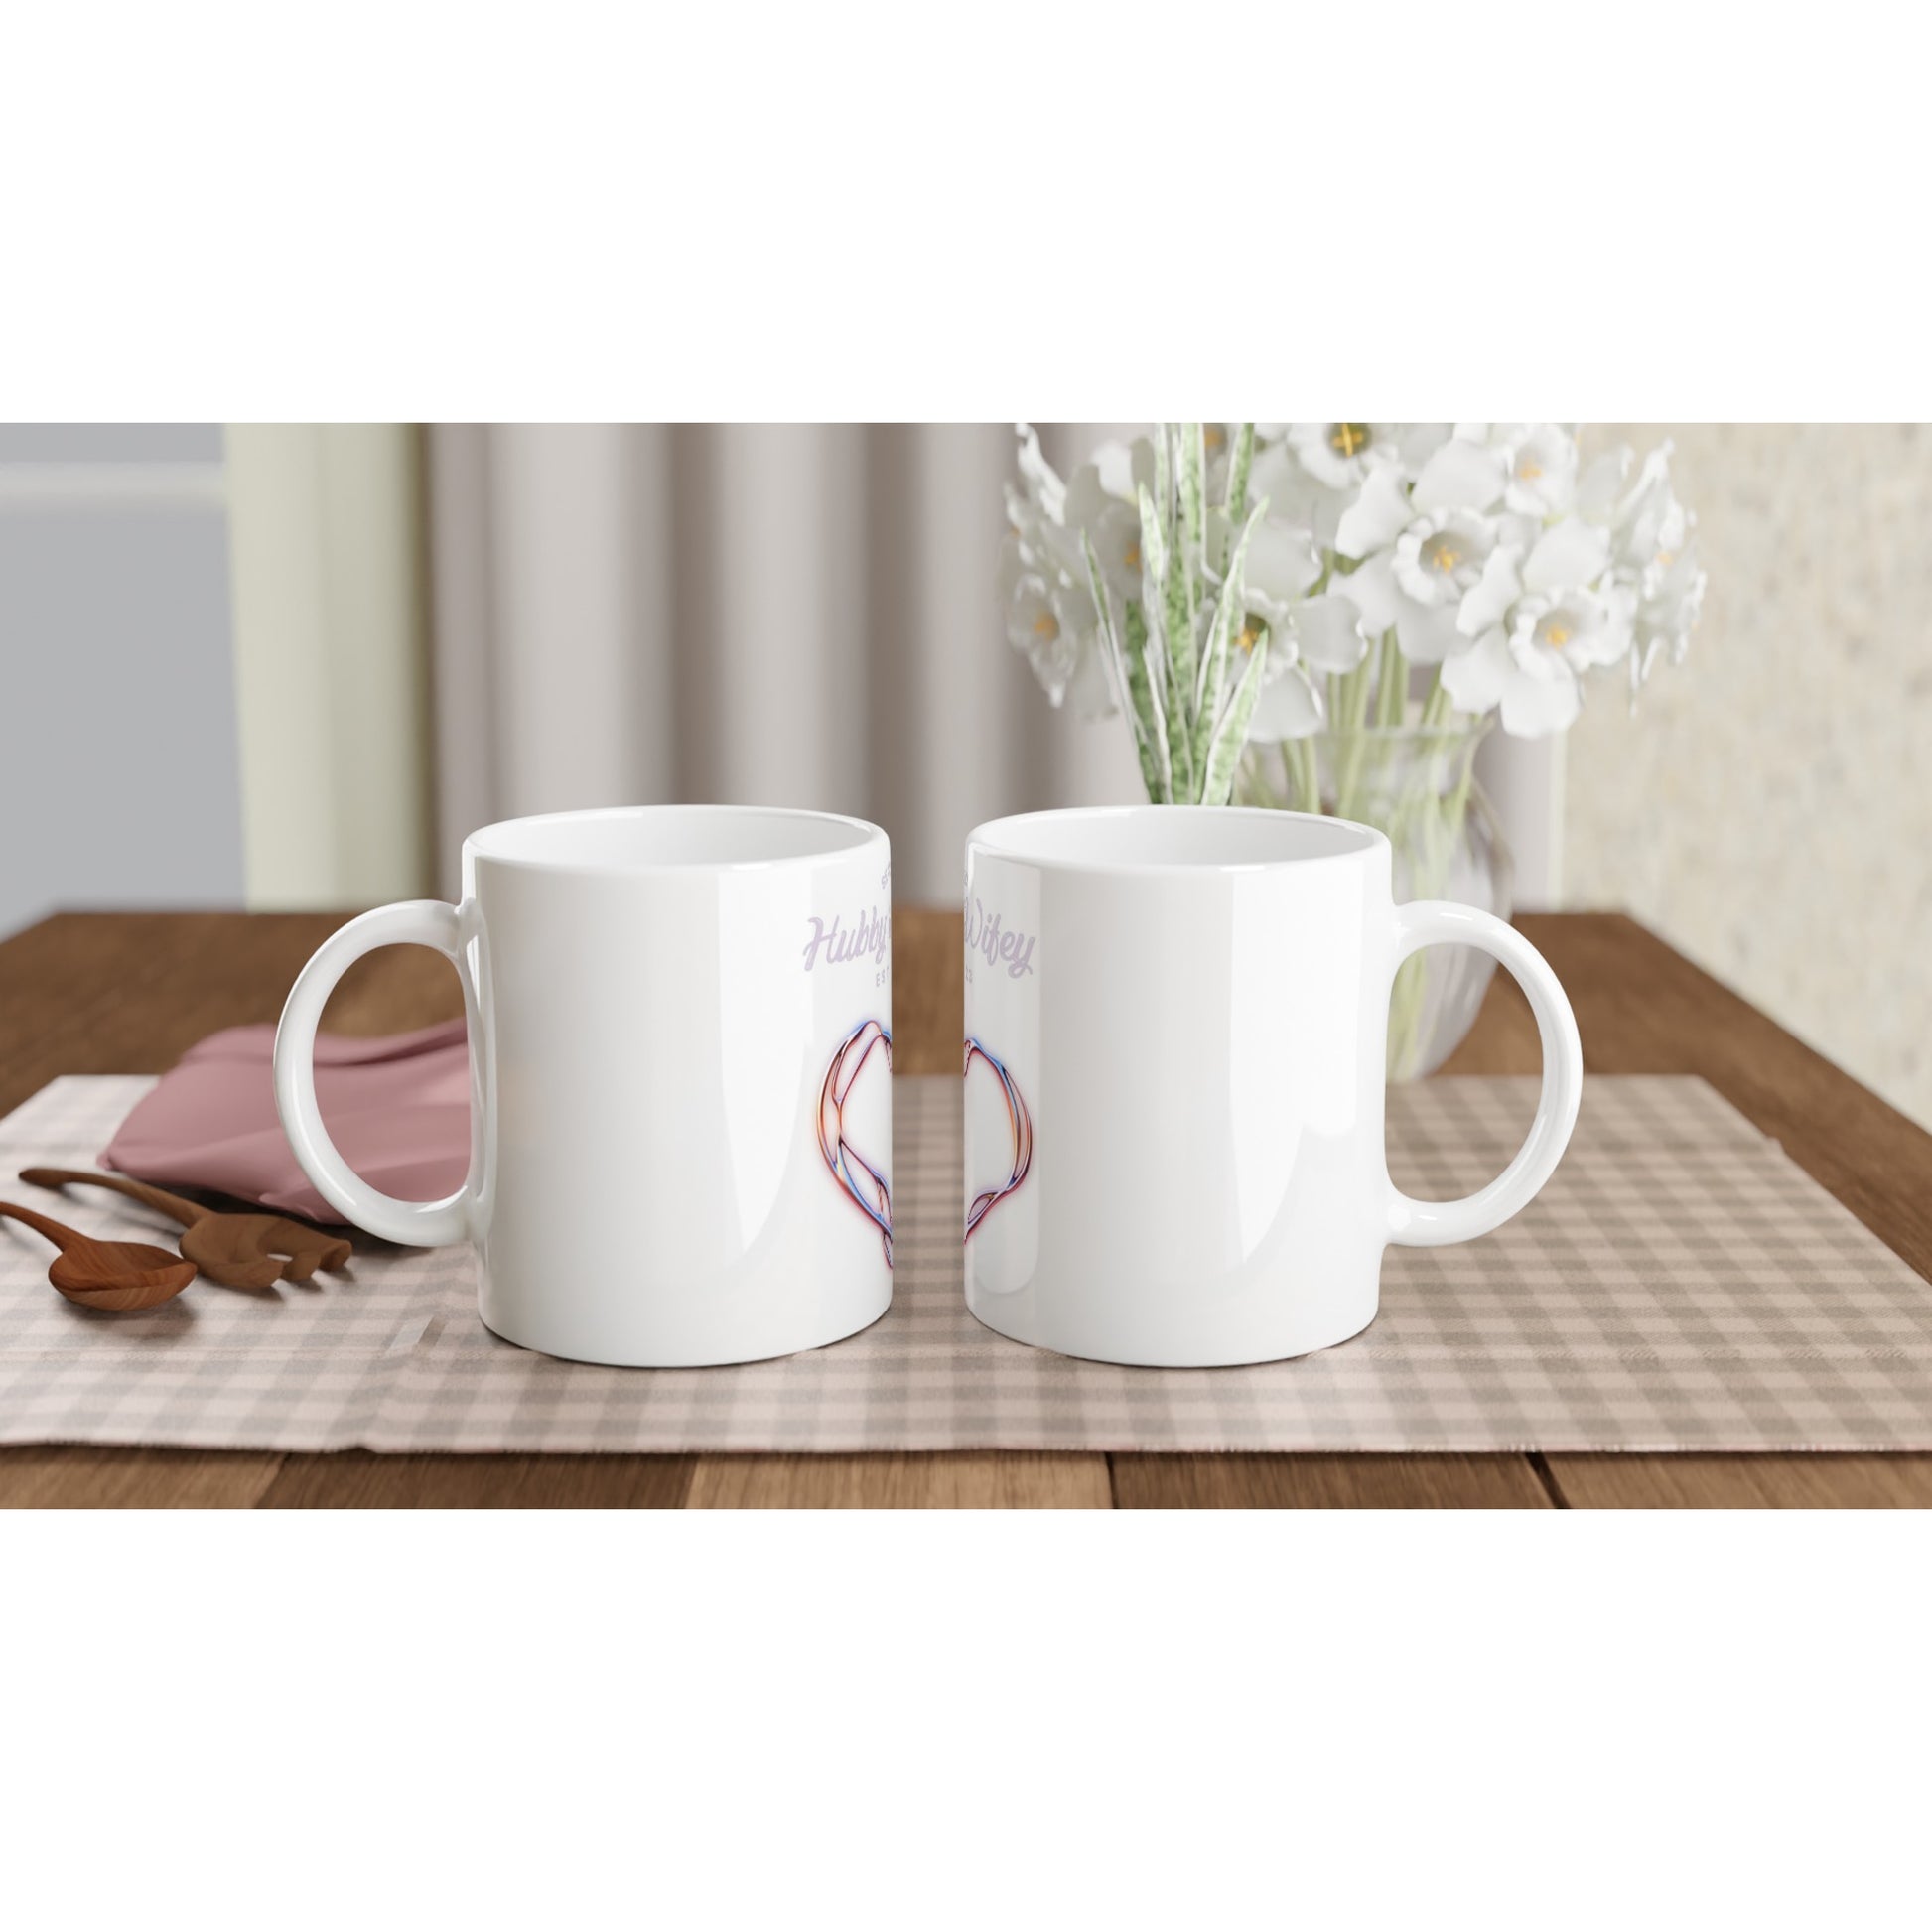 Hubby & Wifey Customizable White 11oz Ceramic Mug